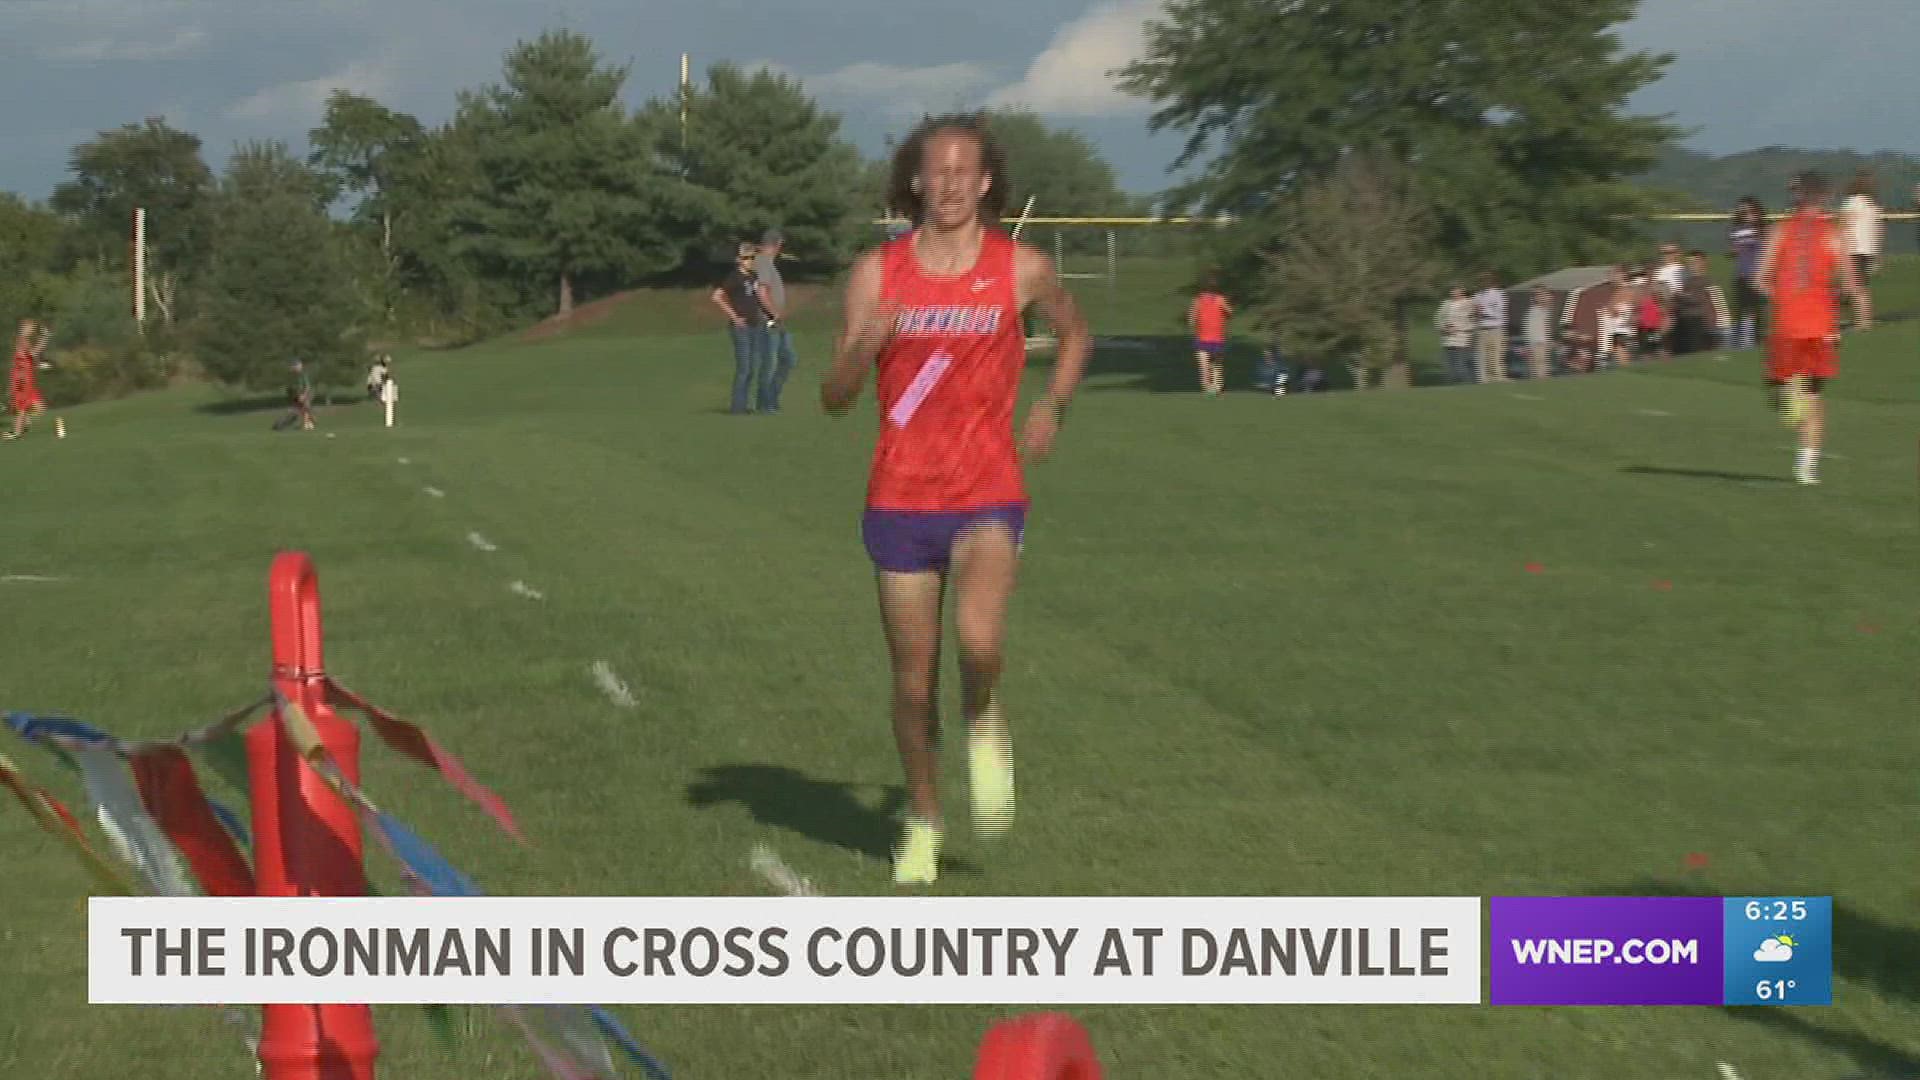 Lieberman just ran a 16:28 at a home cross country meet in Danville